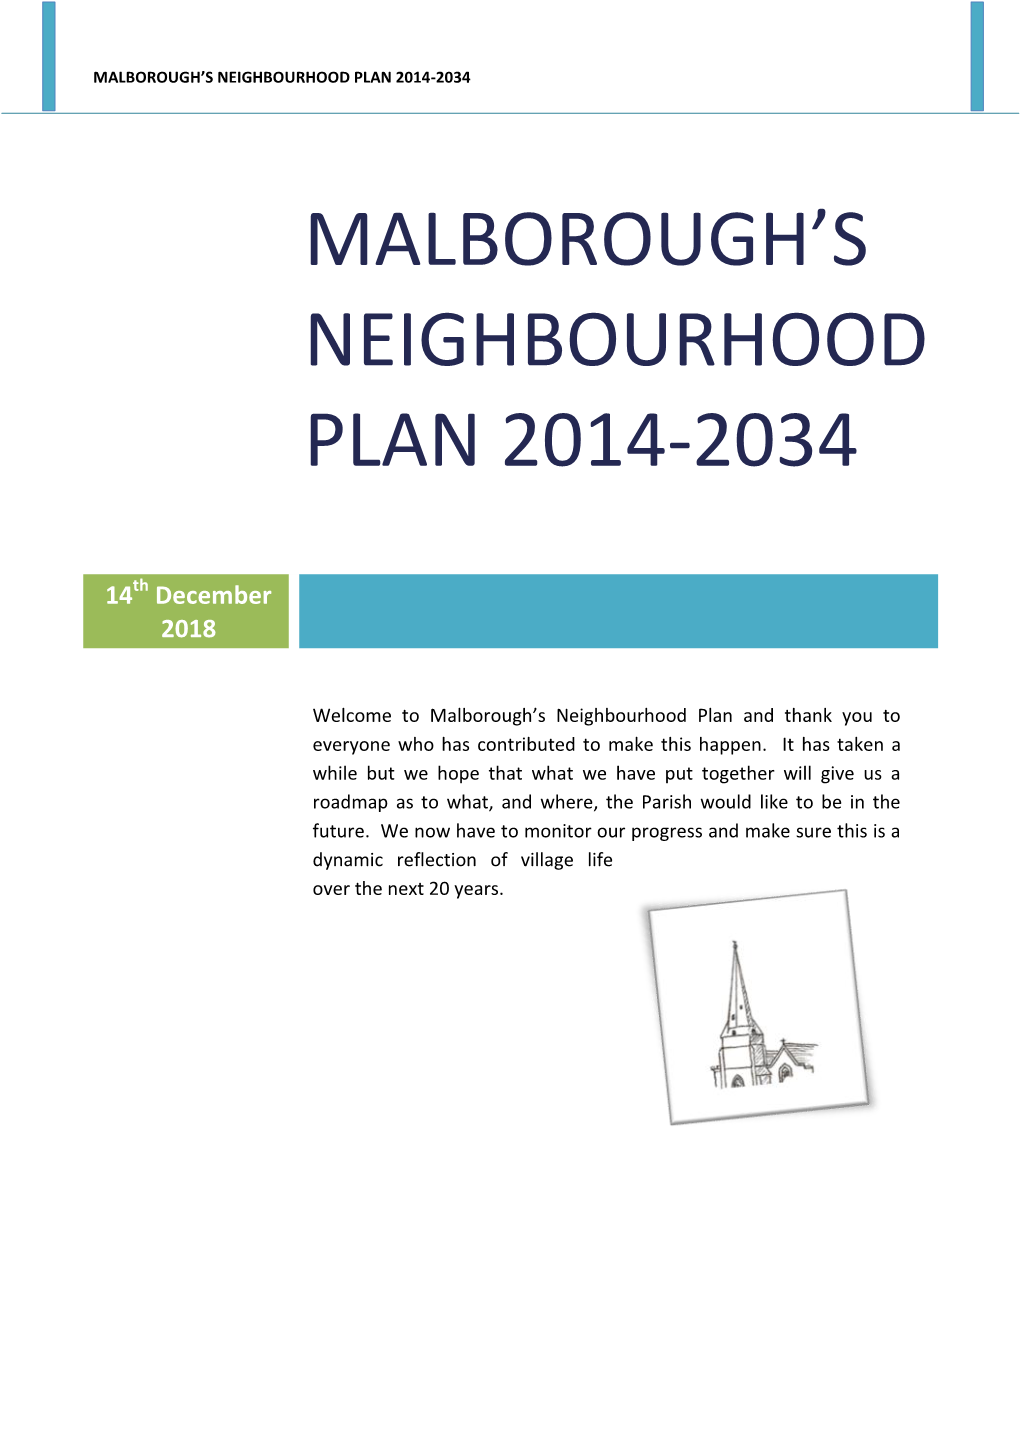 Malborough's Neighbourhood Plan 2014-2034